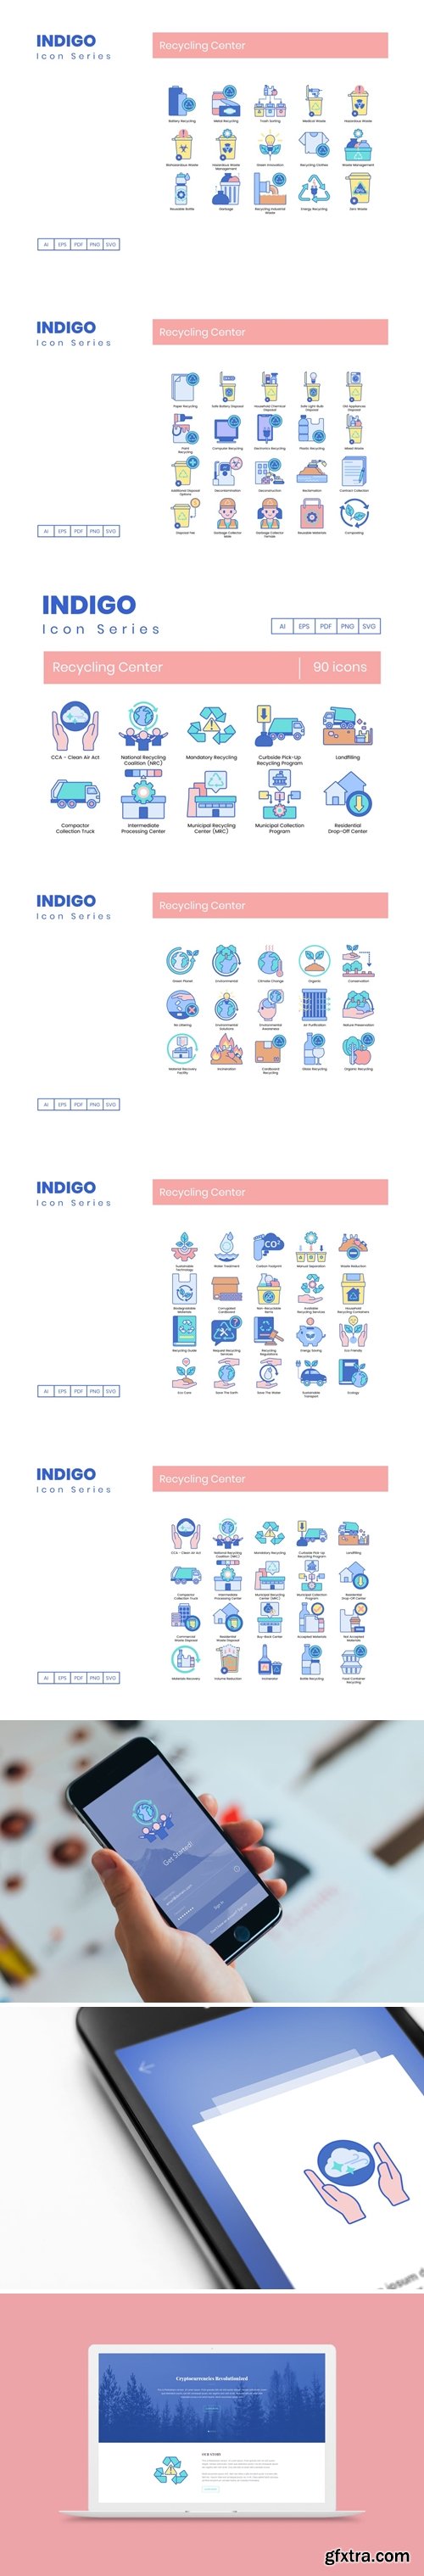 90 Recycling Center Icons - Indigo Series